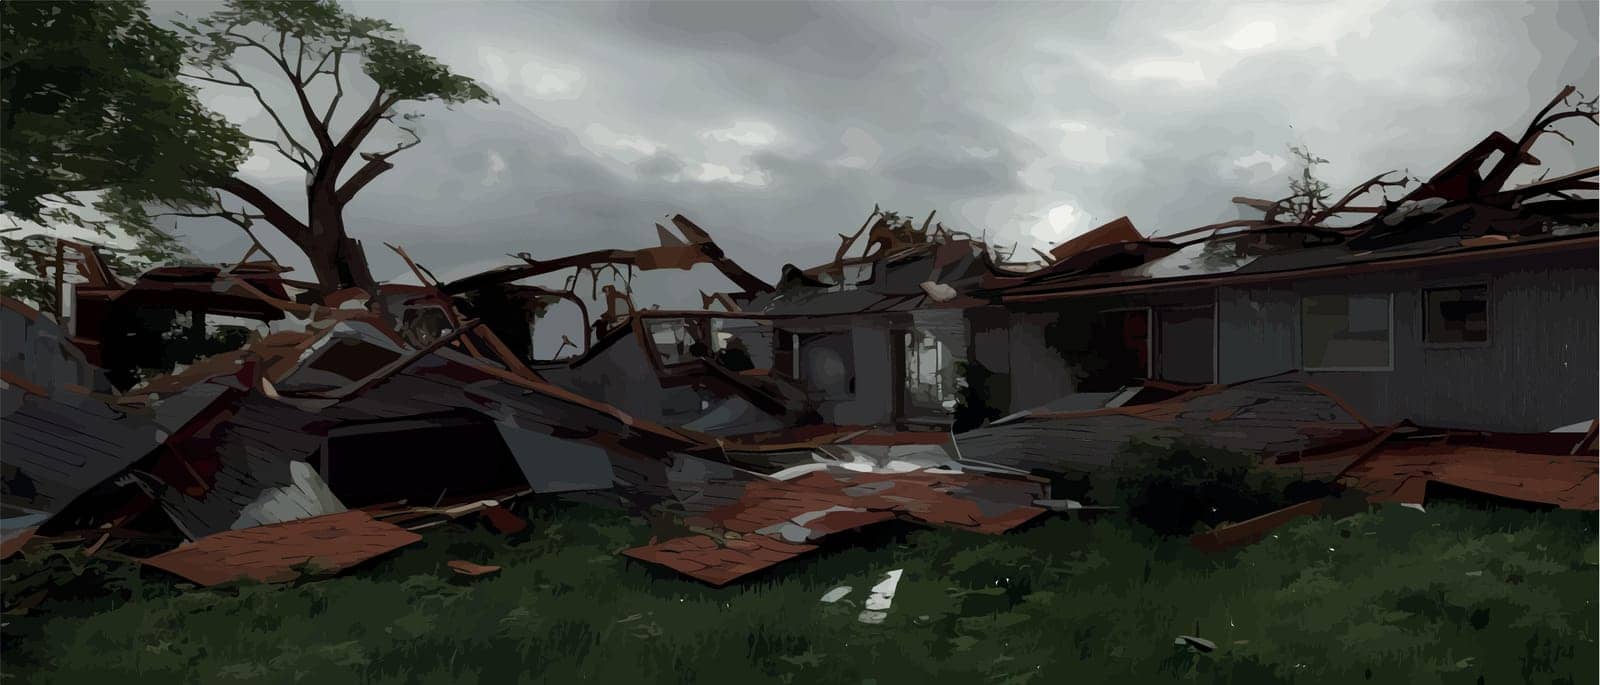 Tornadoes destroy buildings. Illustrations of natural disasters. Destructive natural phenomena. by EkaterinaPereslavtseva